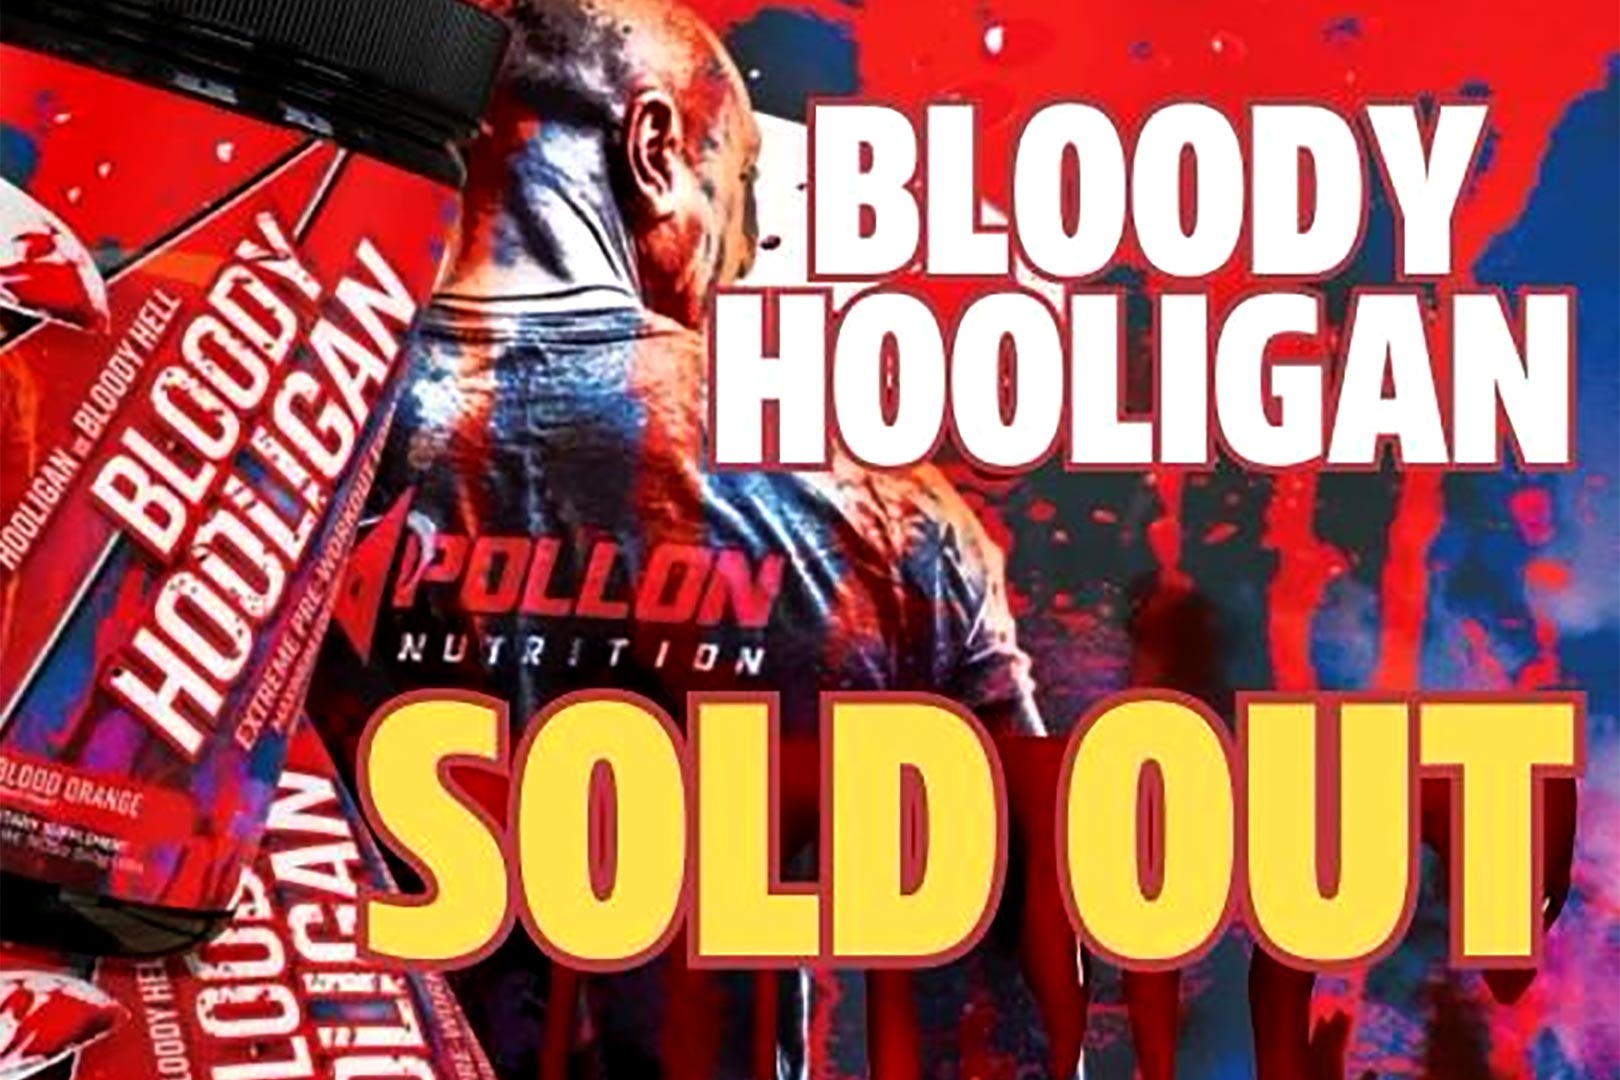 Apollon Nutrition Sold Through Blood Hooligan